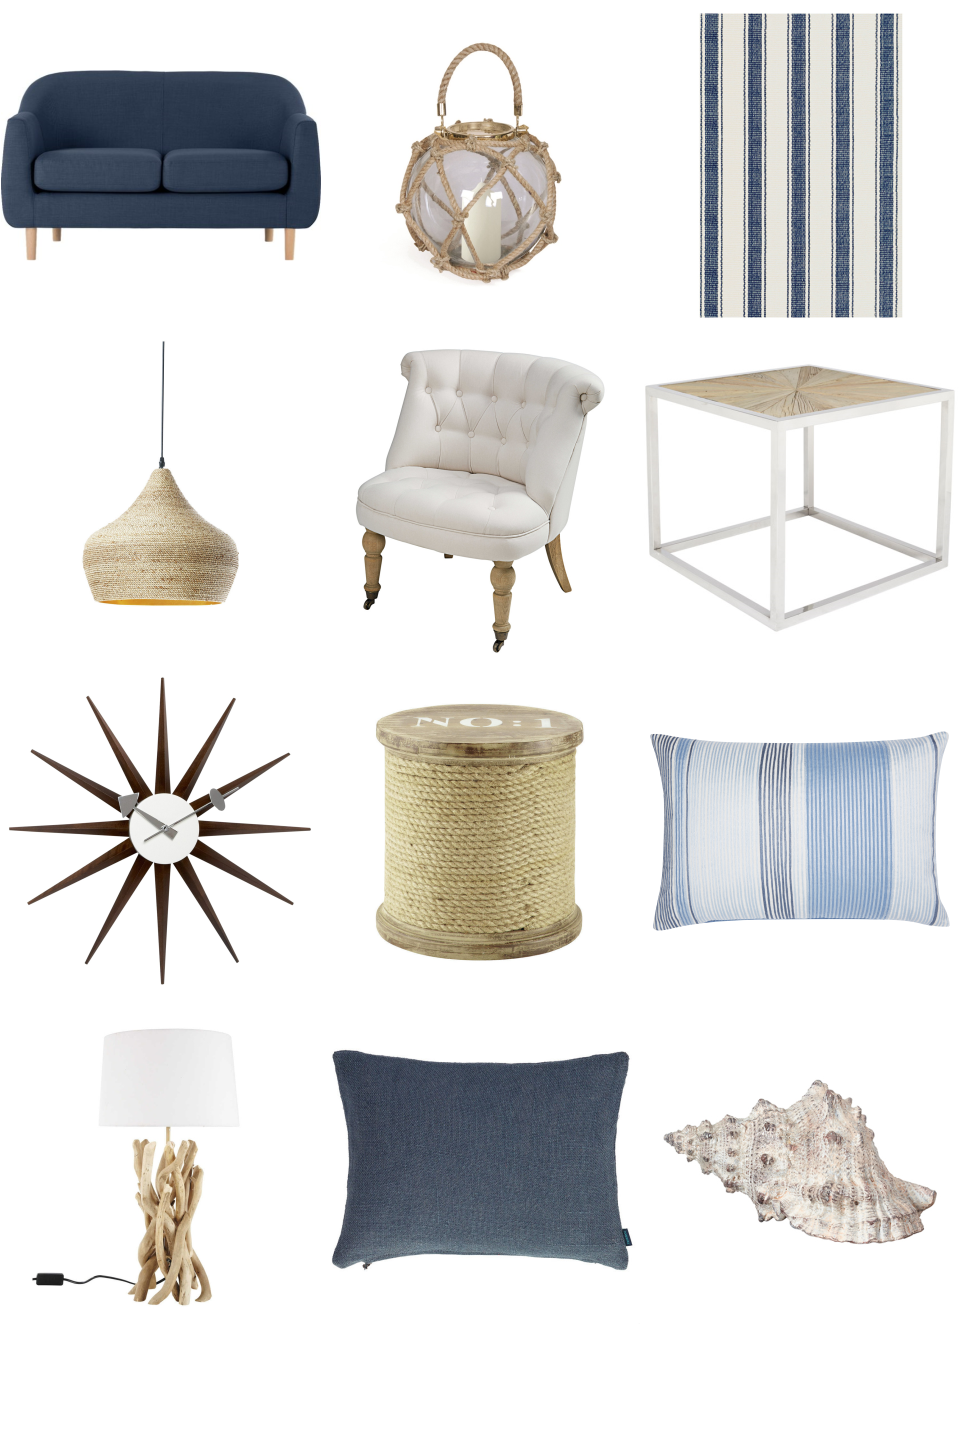 Nautical Blue And White Furnishful S Living Room Ideas Inspiration Boards Furnishful